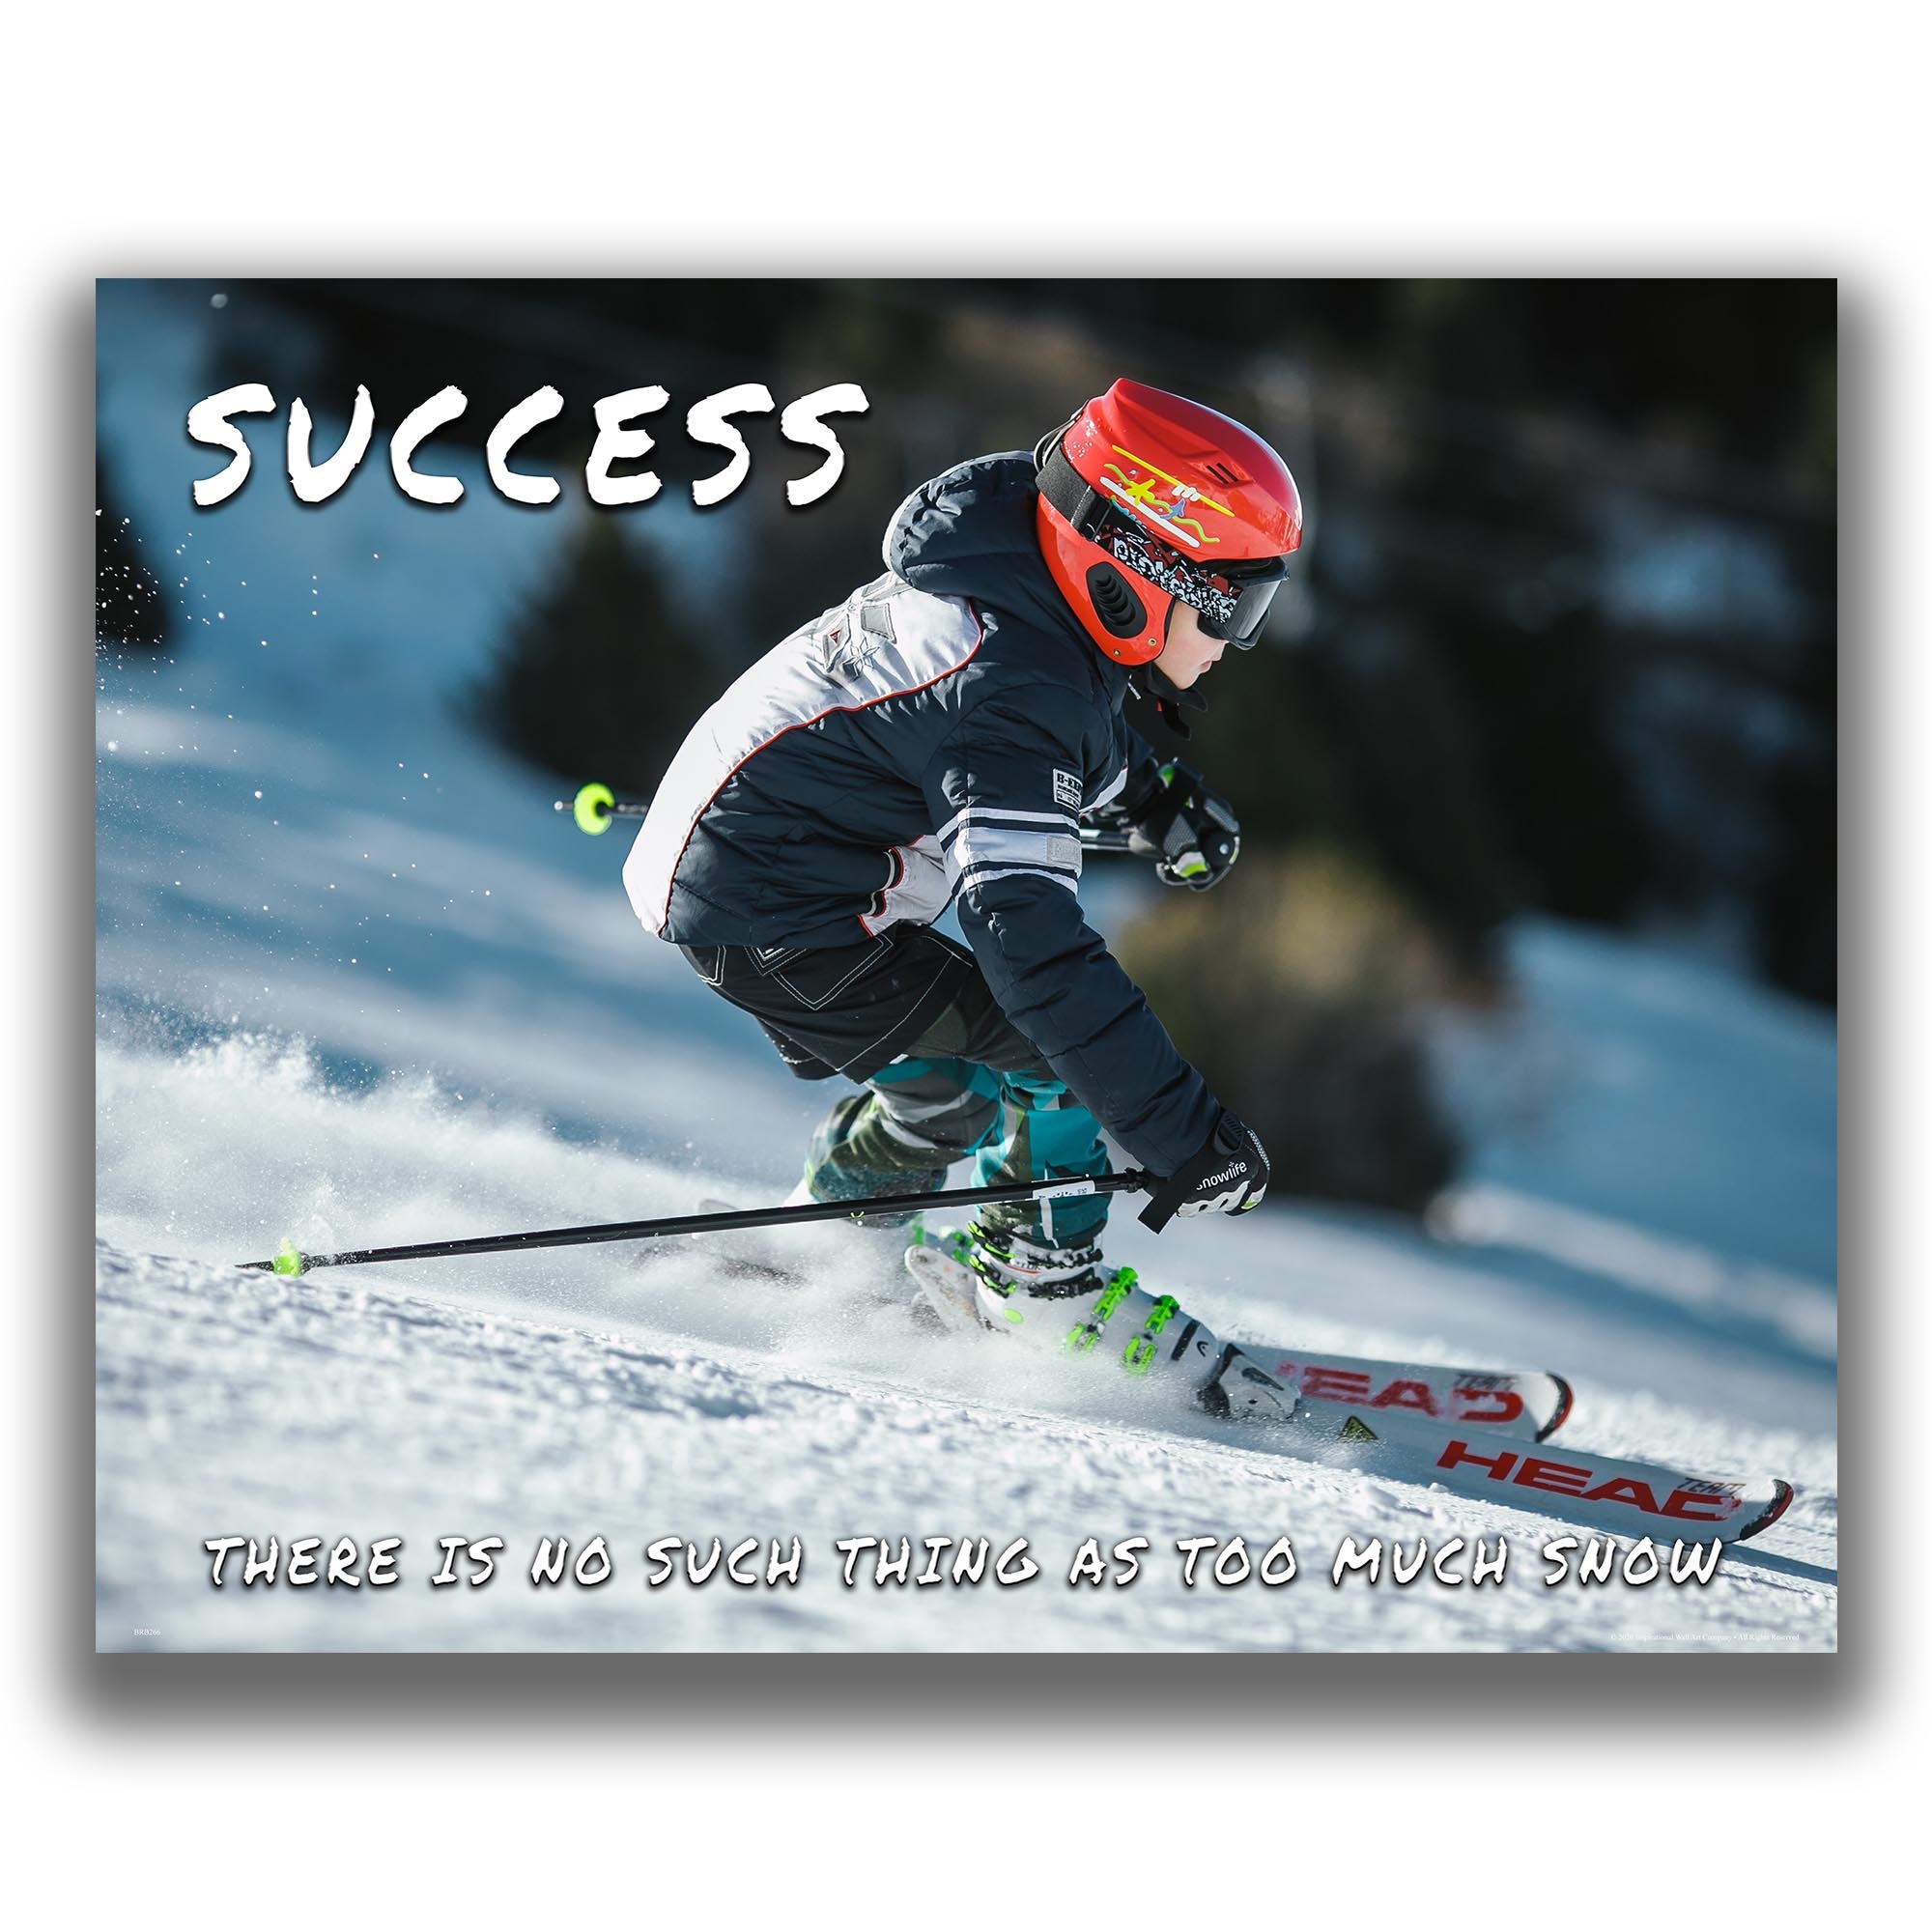 Success - Skiing Poster